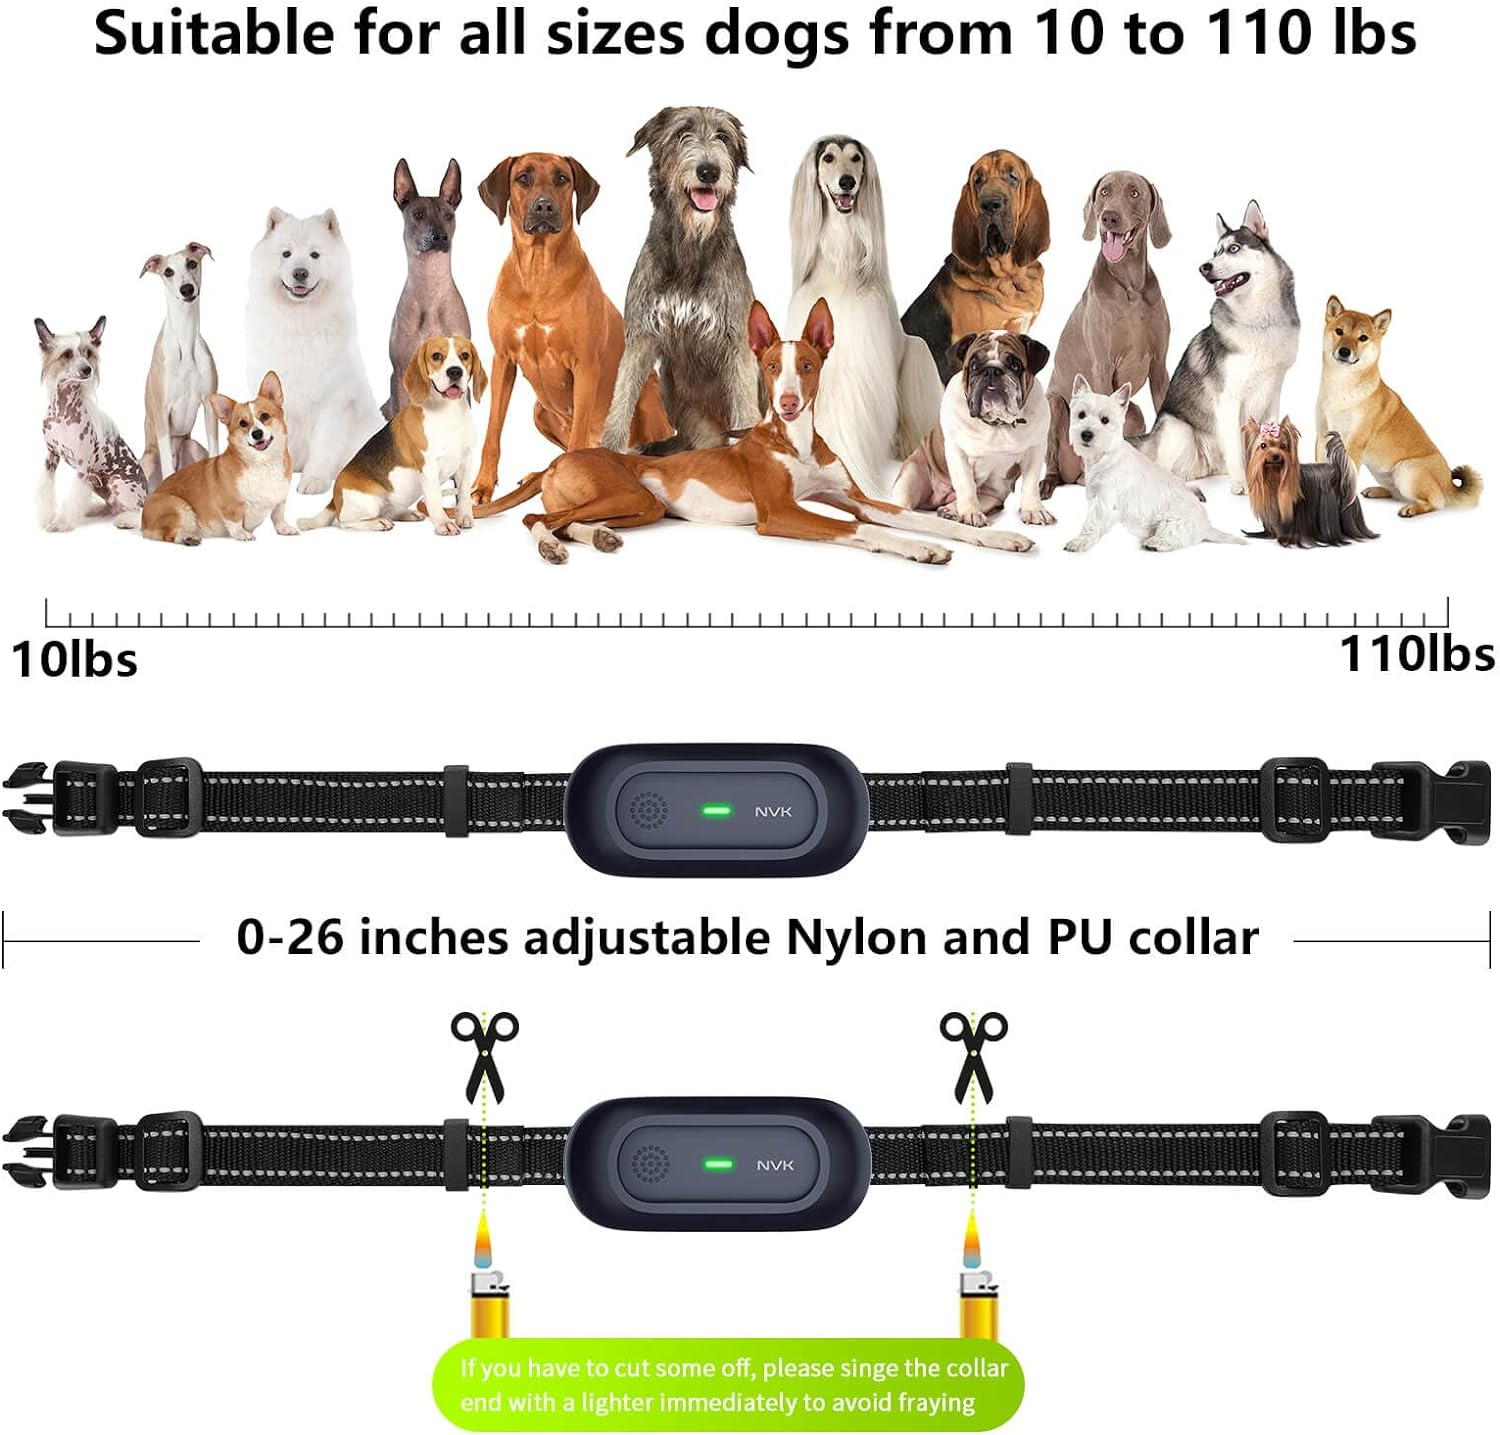 NVK Dog Training Collar, Single Collar Without Remote, Rechargeable Dog Training Collar with 3 Modes, Beep, Vibration and Shock, Waterproof Collar